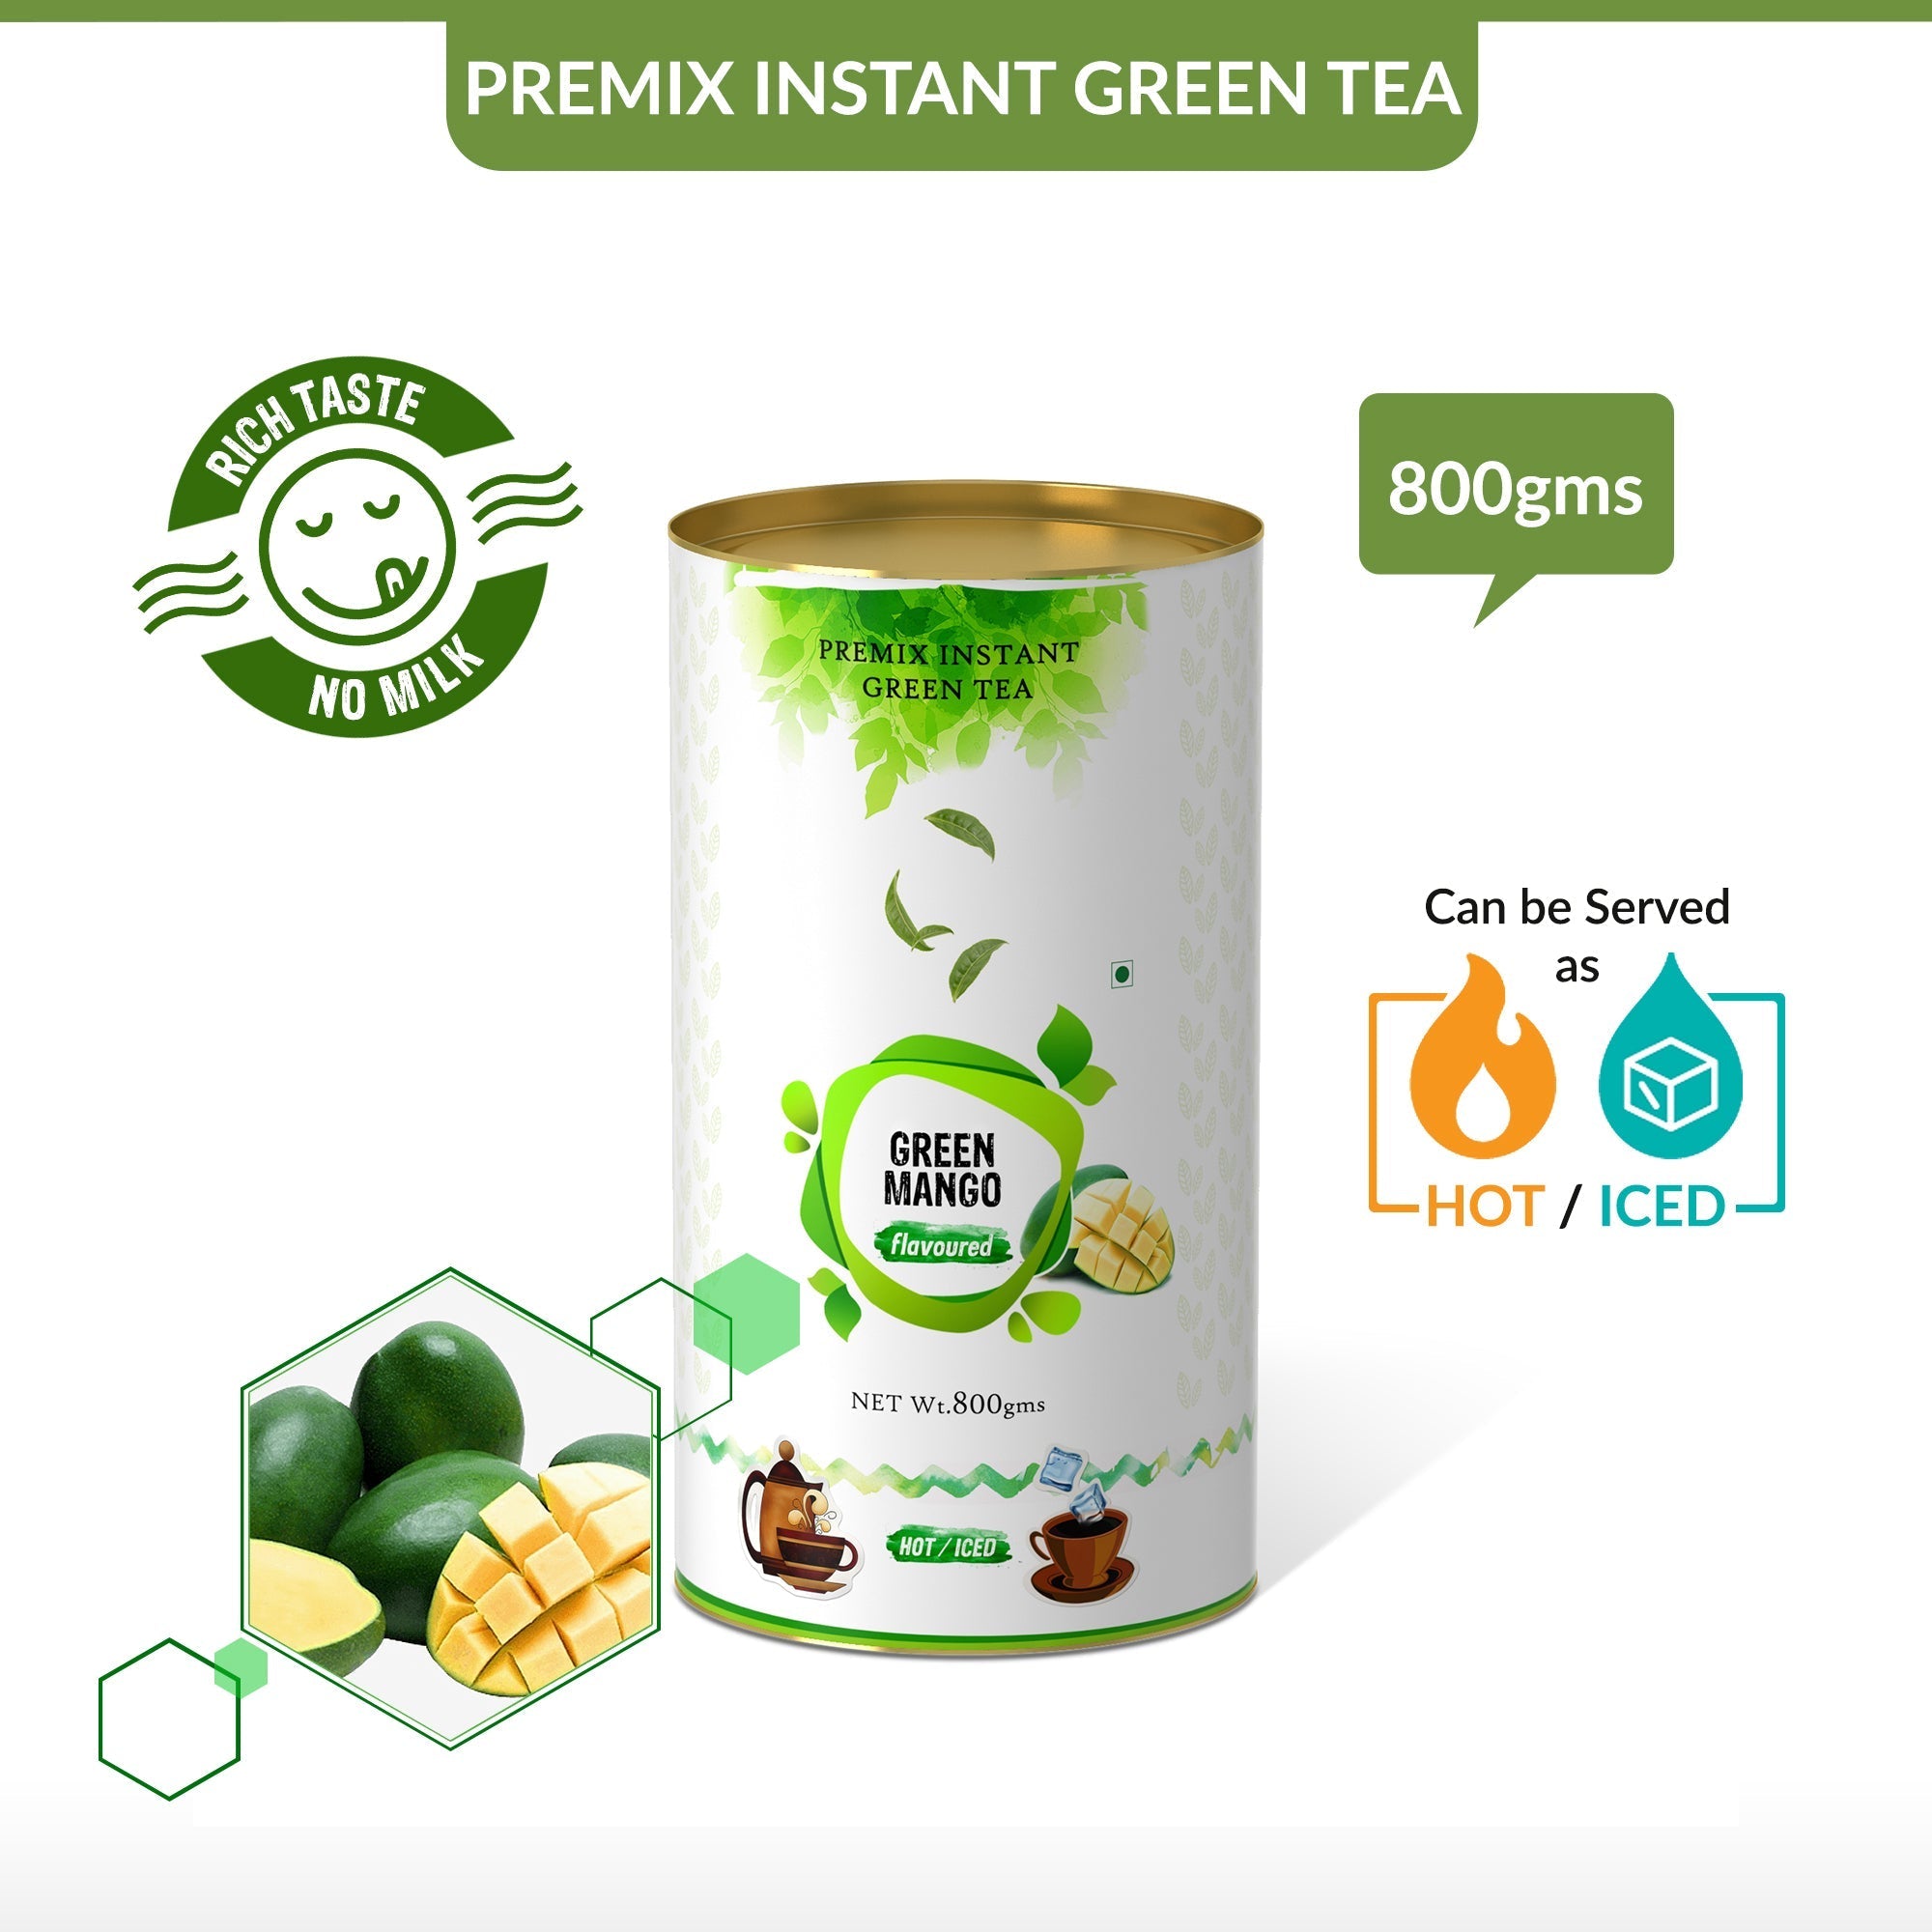 Green Mango Flavored Instant Green Tea - 800 gms